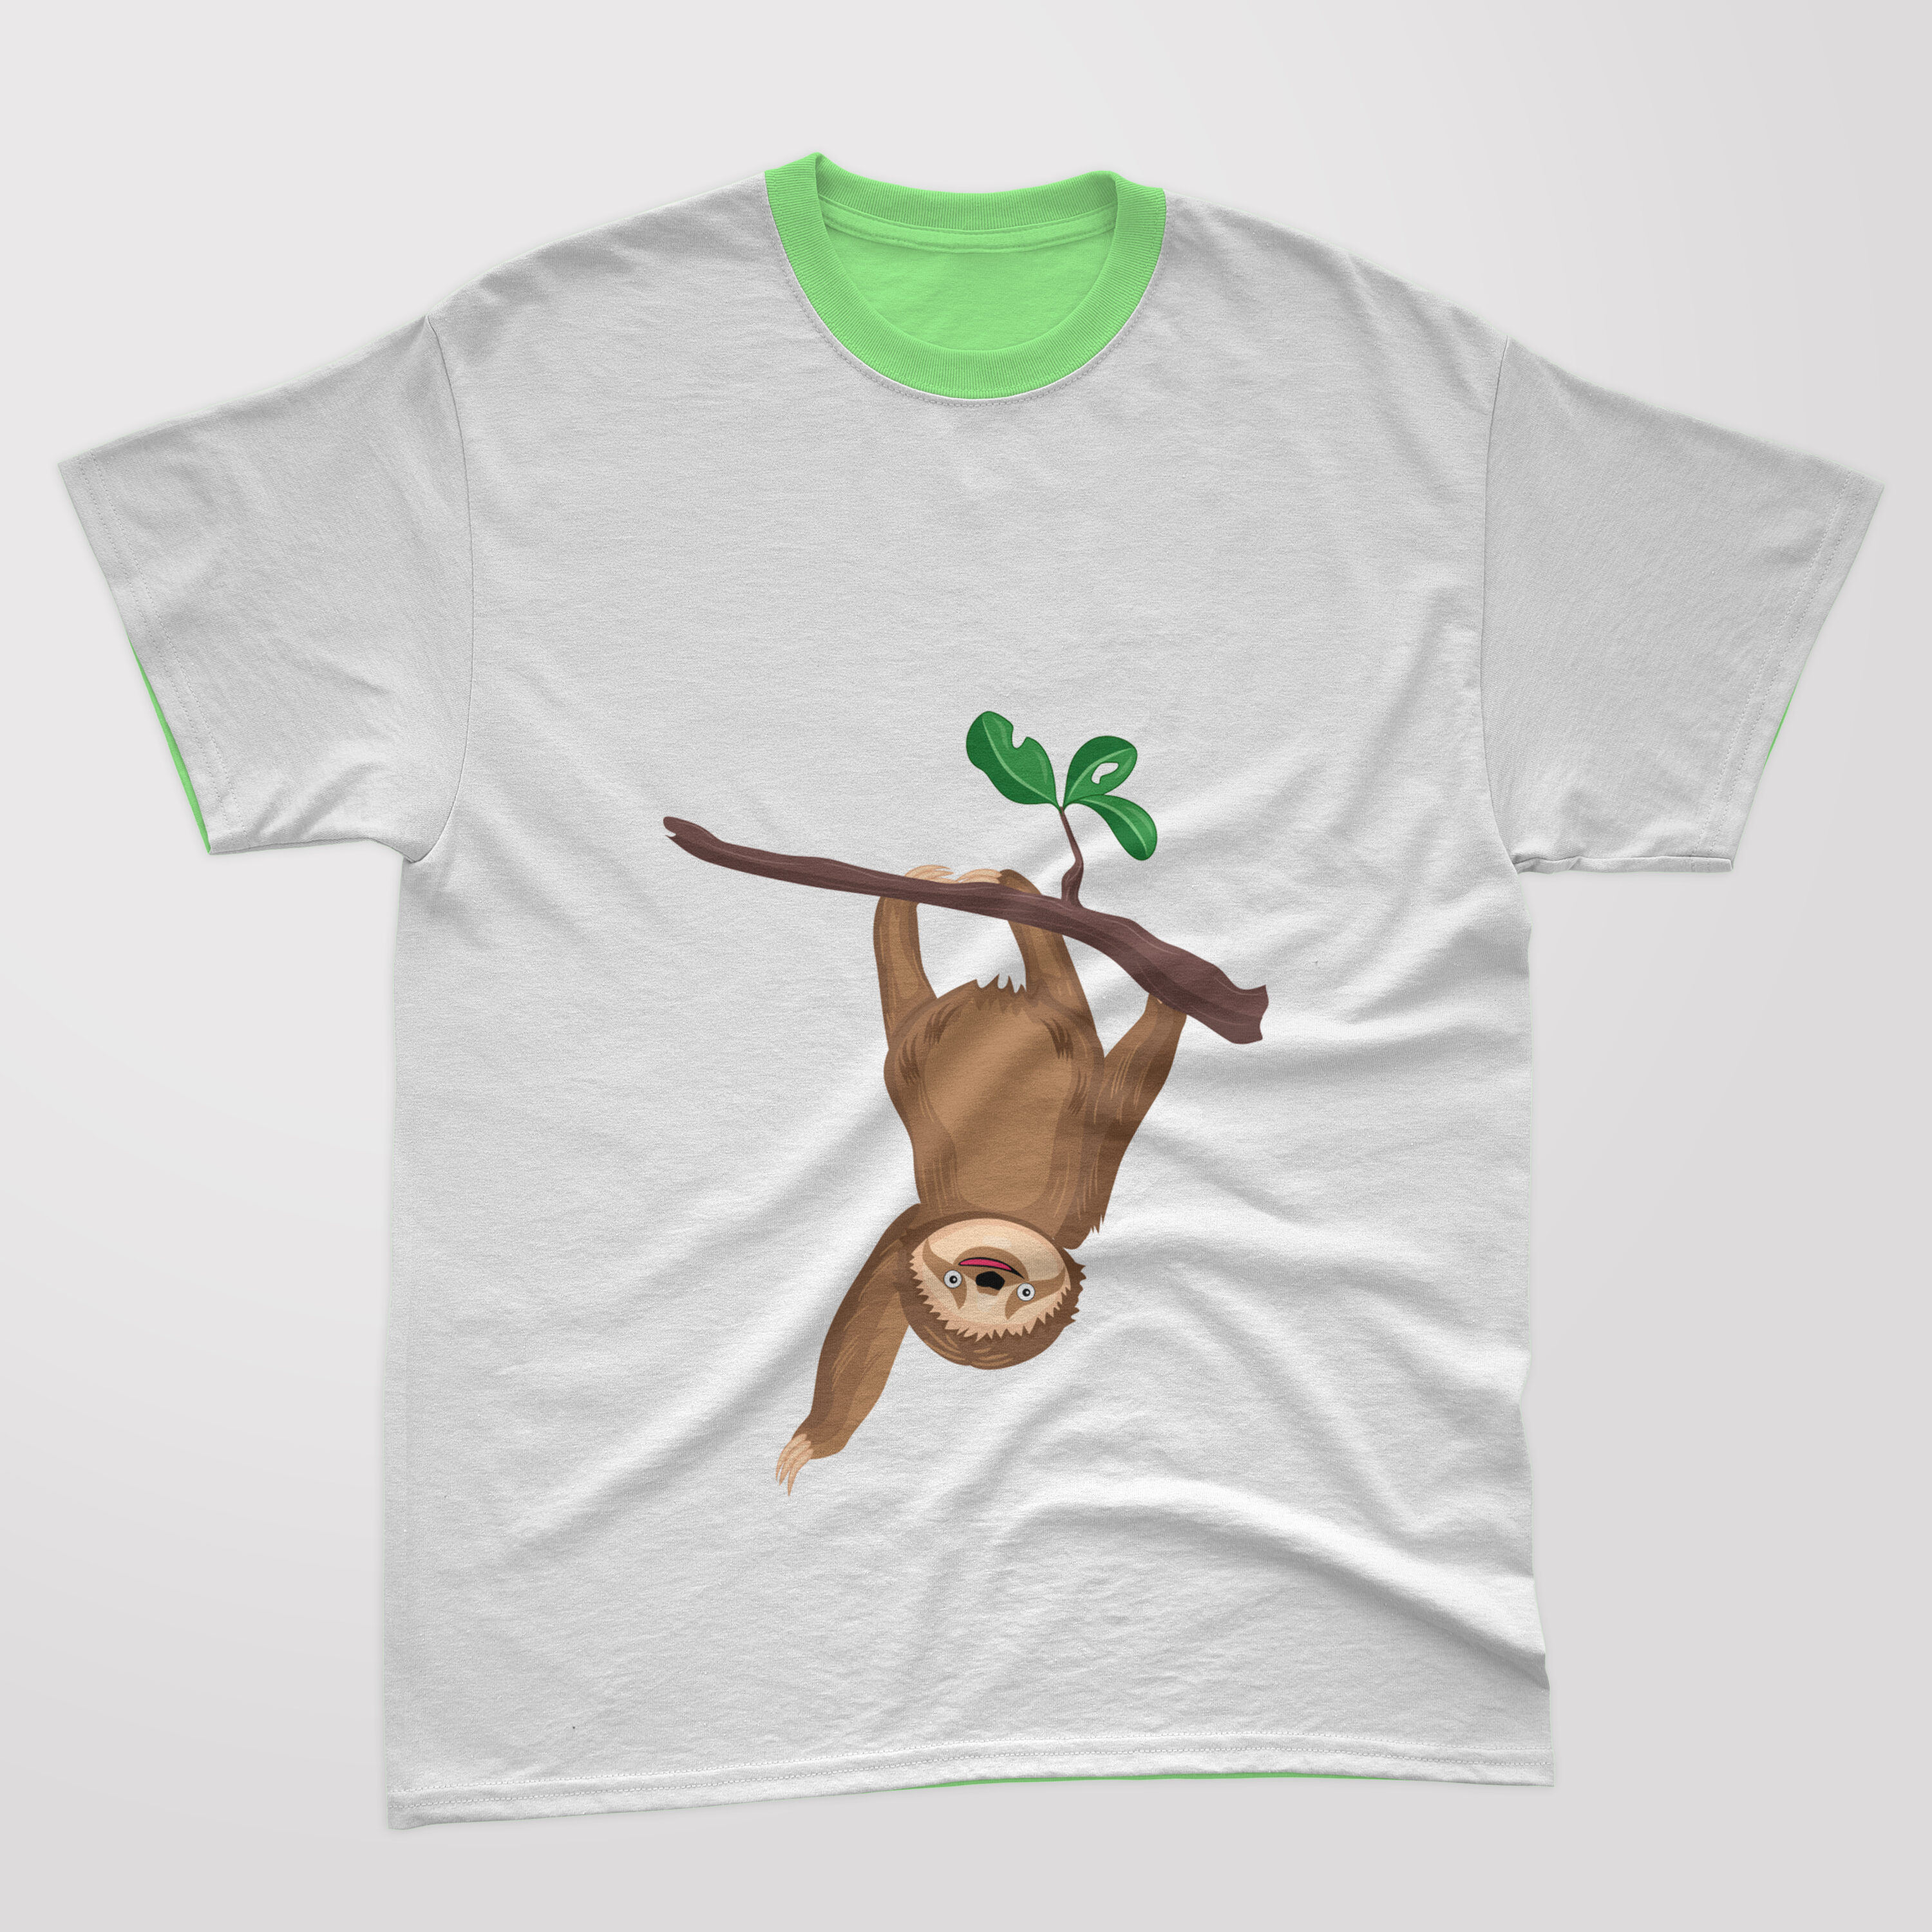 T-shirt image with enchanting sloth print on wood.